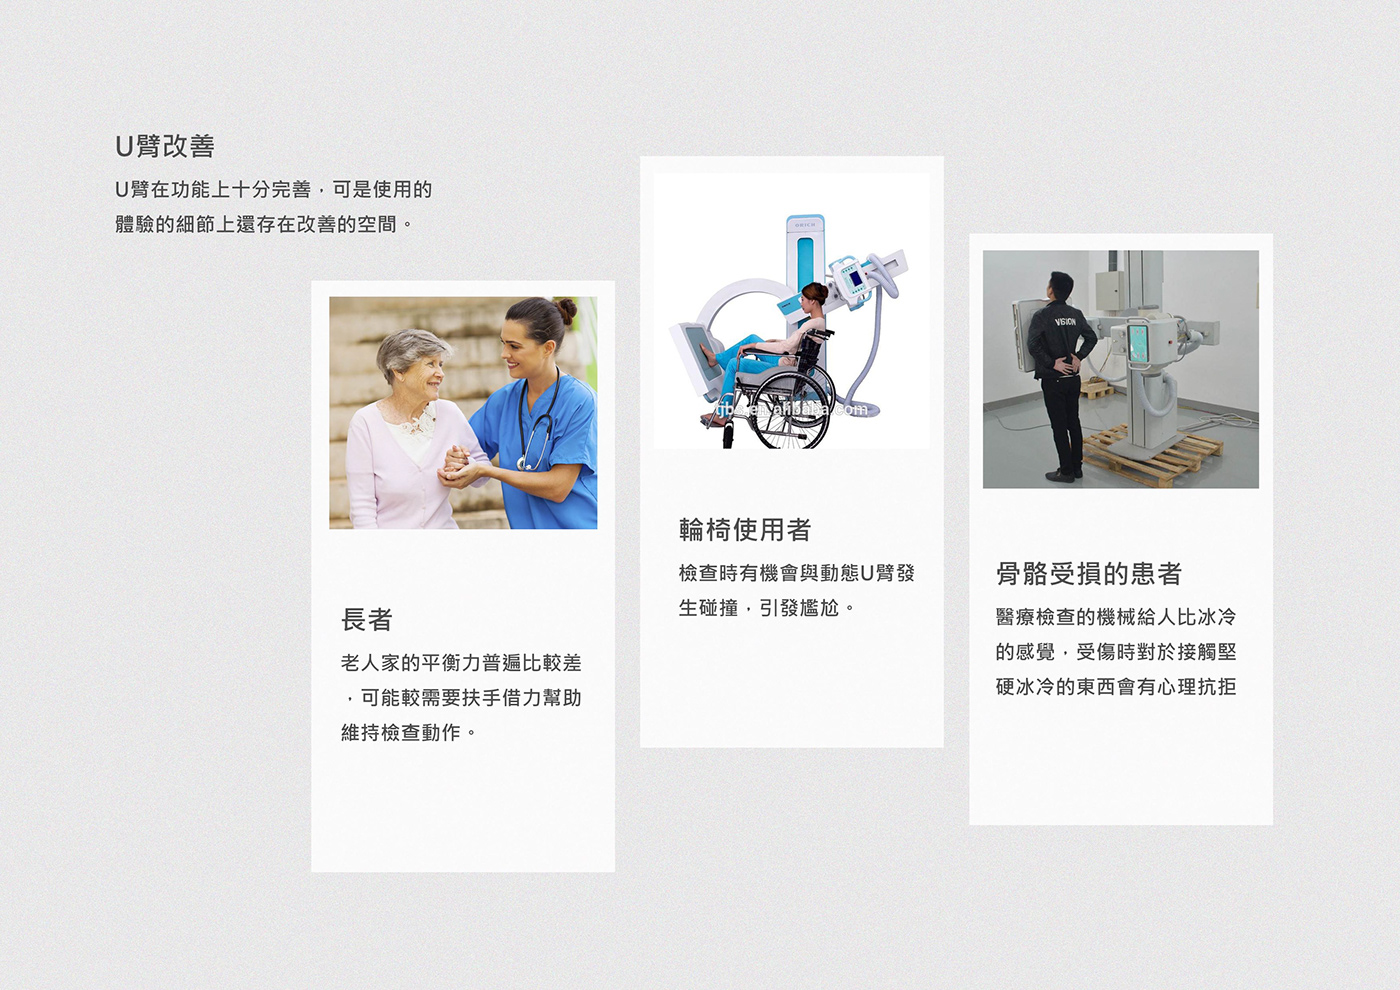 xray meddical uarm medical machine product machine design research